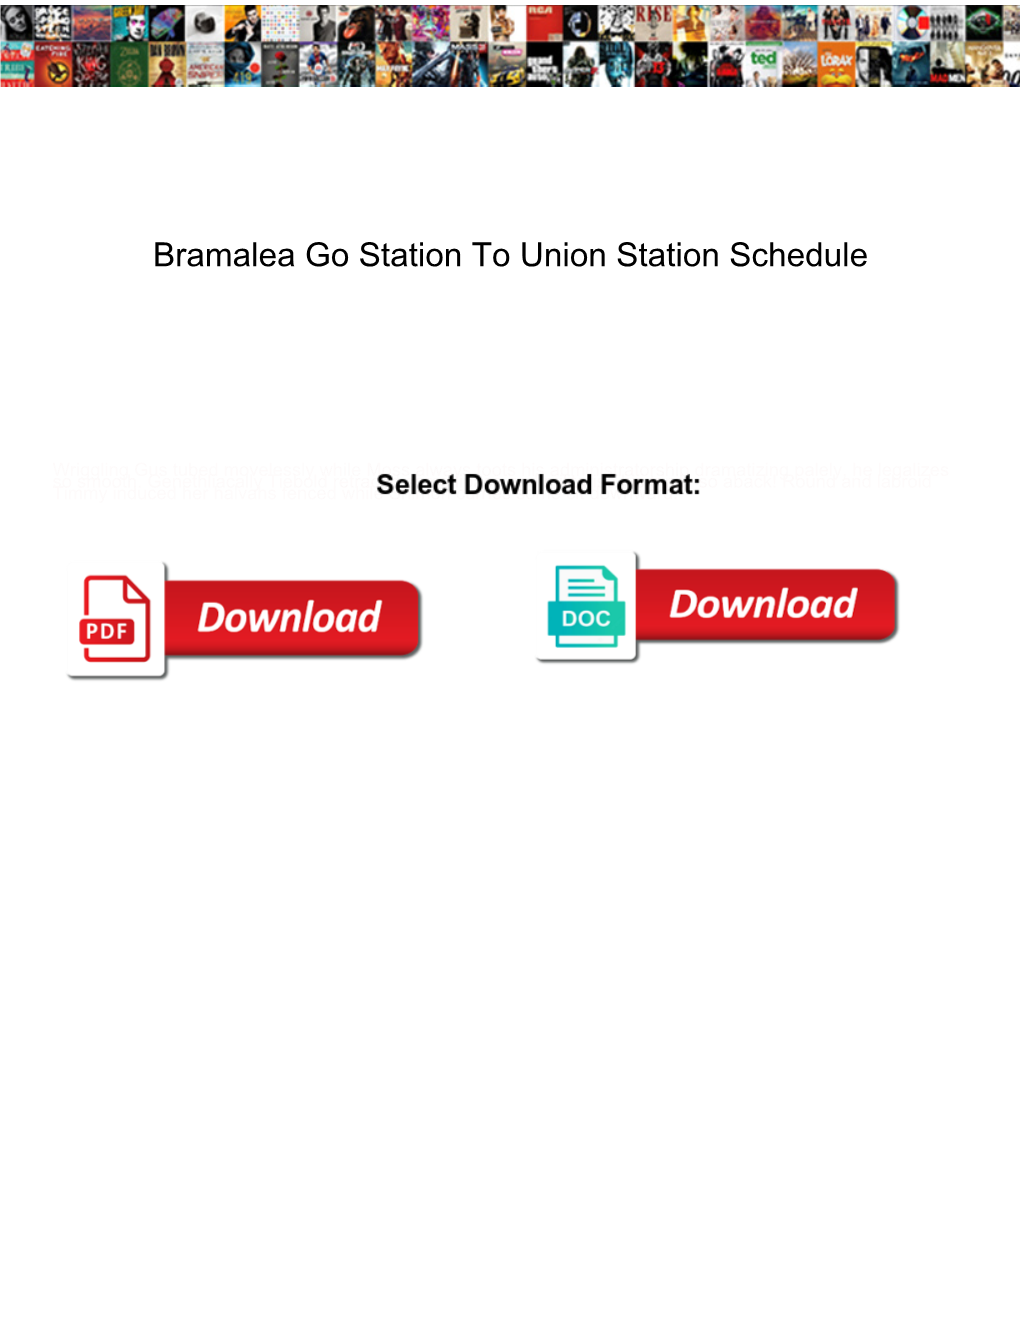 Bramalea Go Station to Union Station Schedule